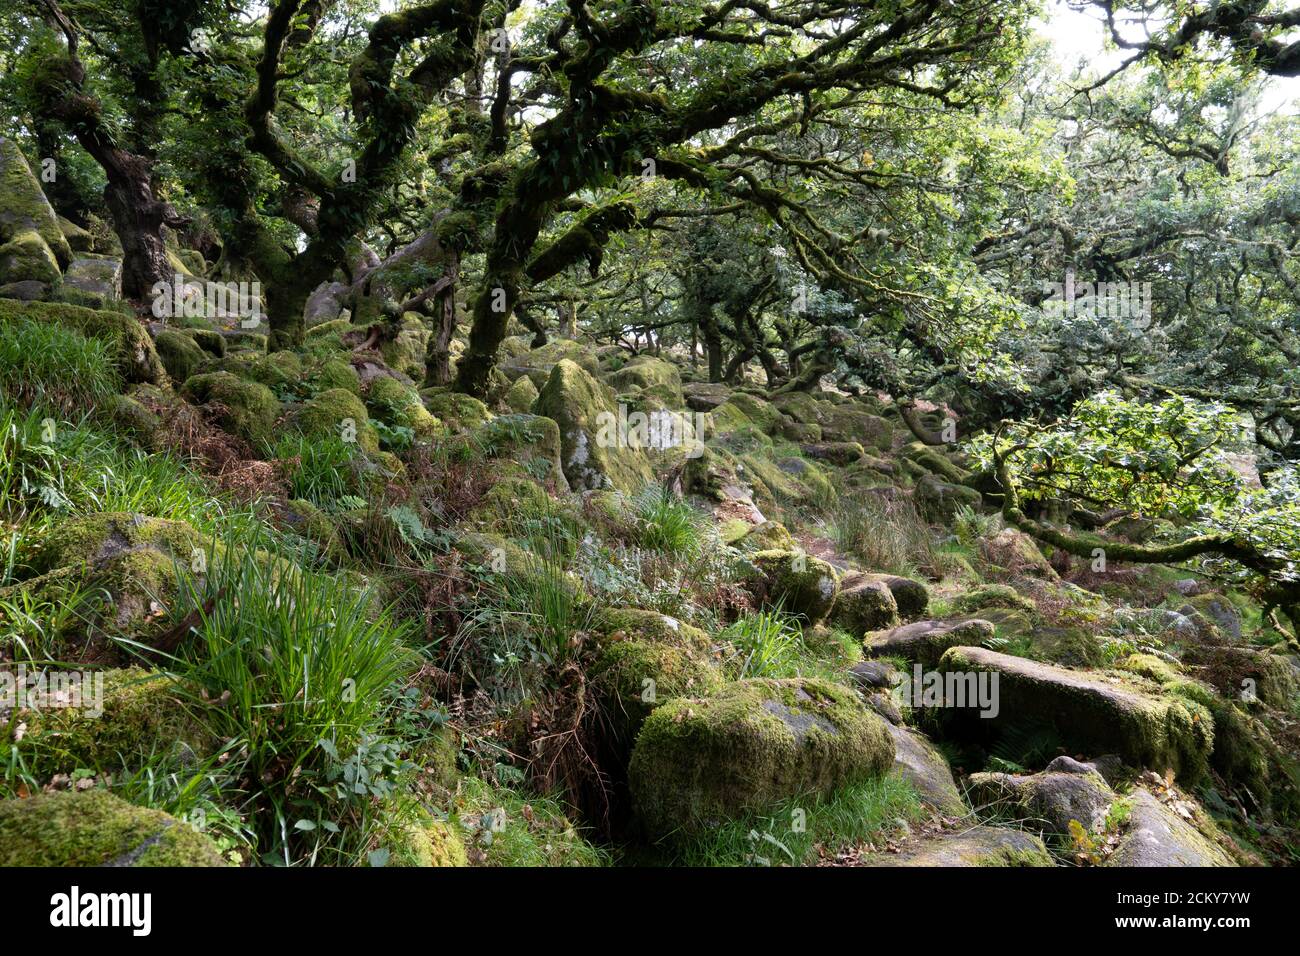 Wistman's Wood, Dartmoor, Devon, UK. One of the highest oakwoods in Britain an example of native upland oak woodland. Stock Photo